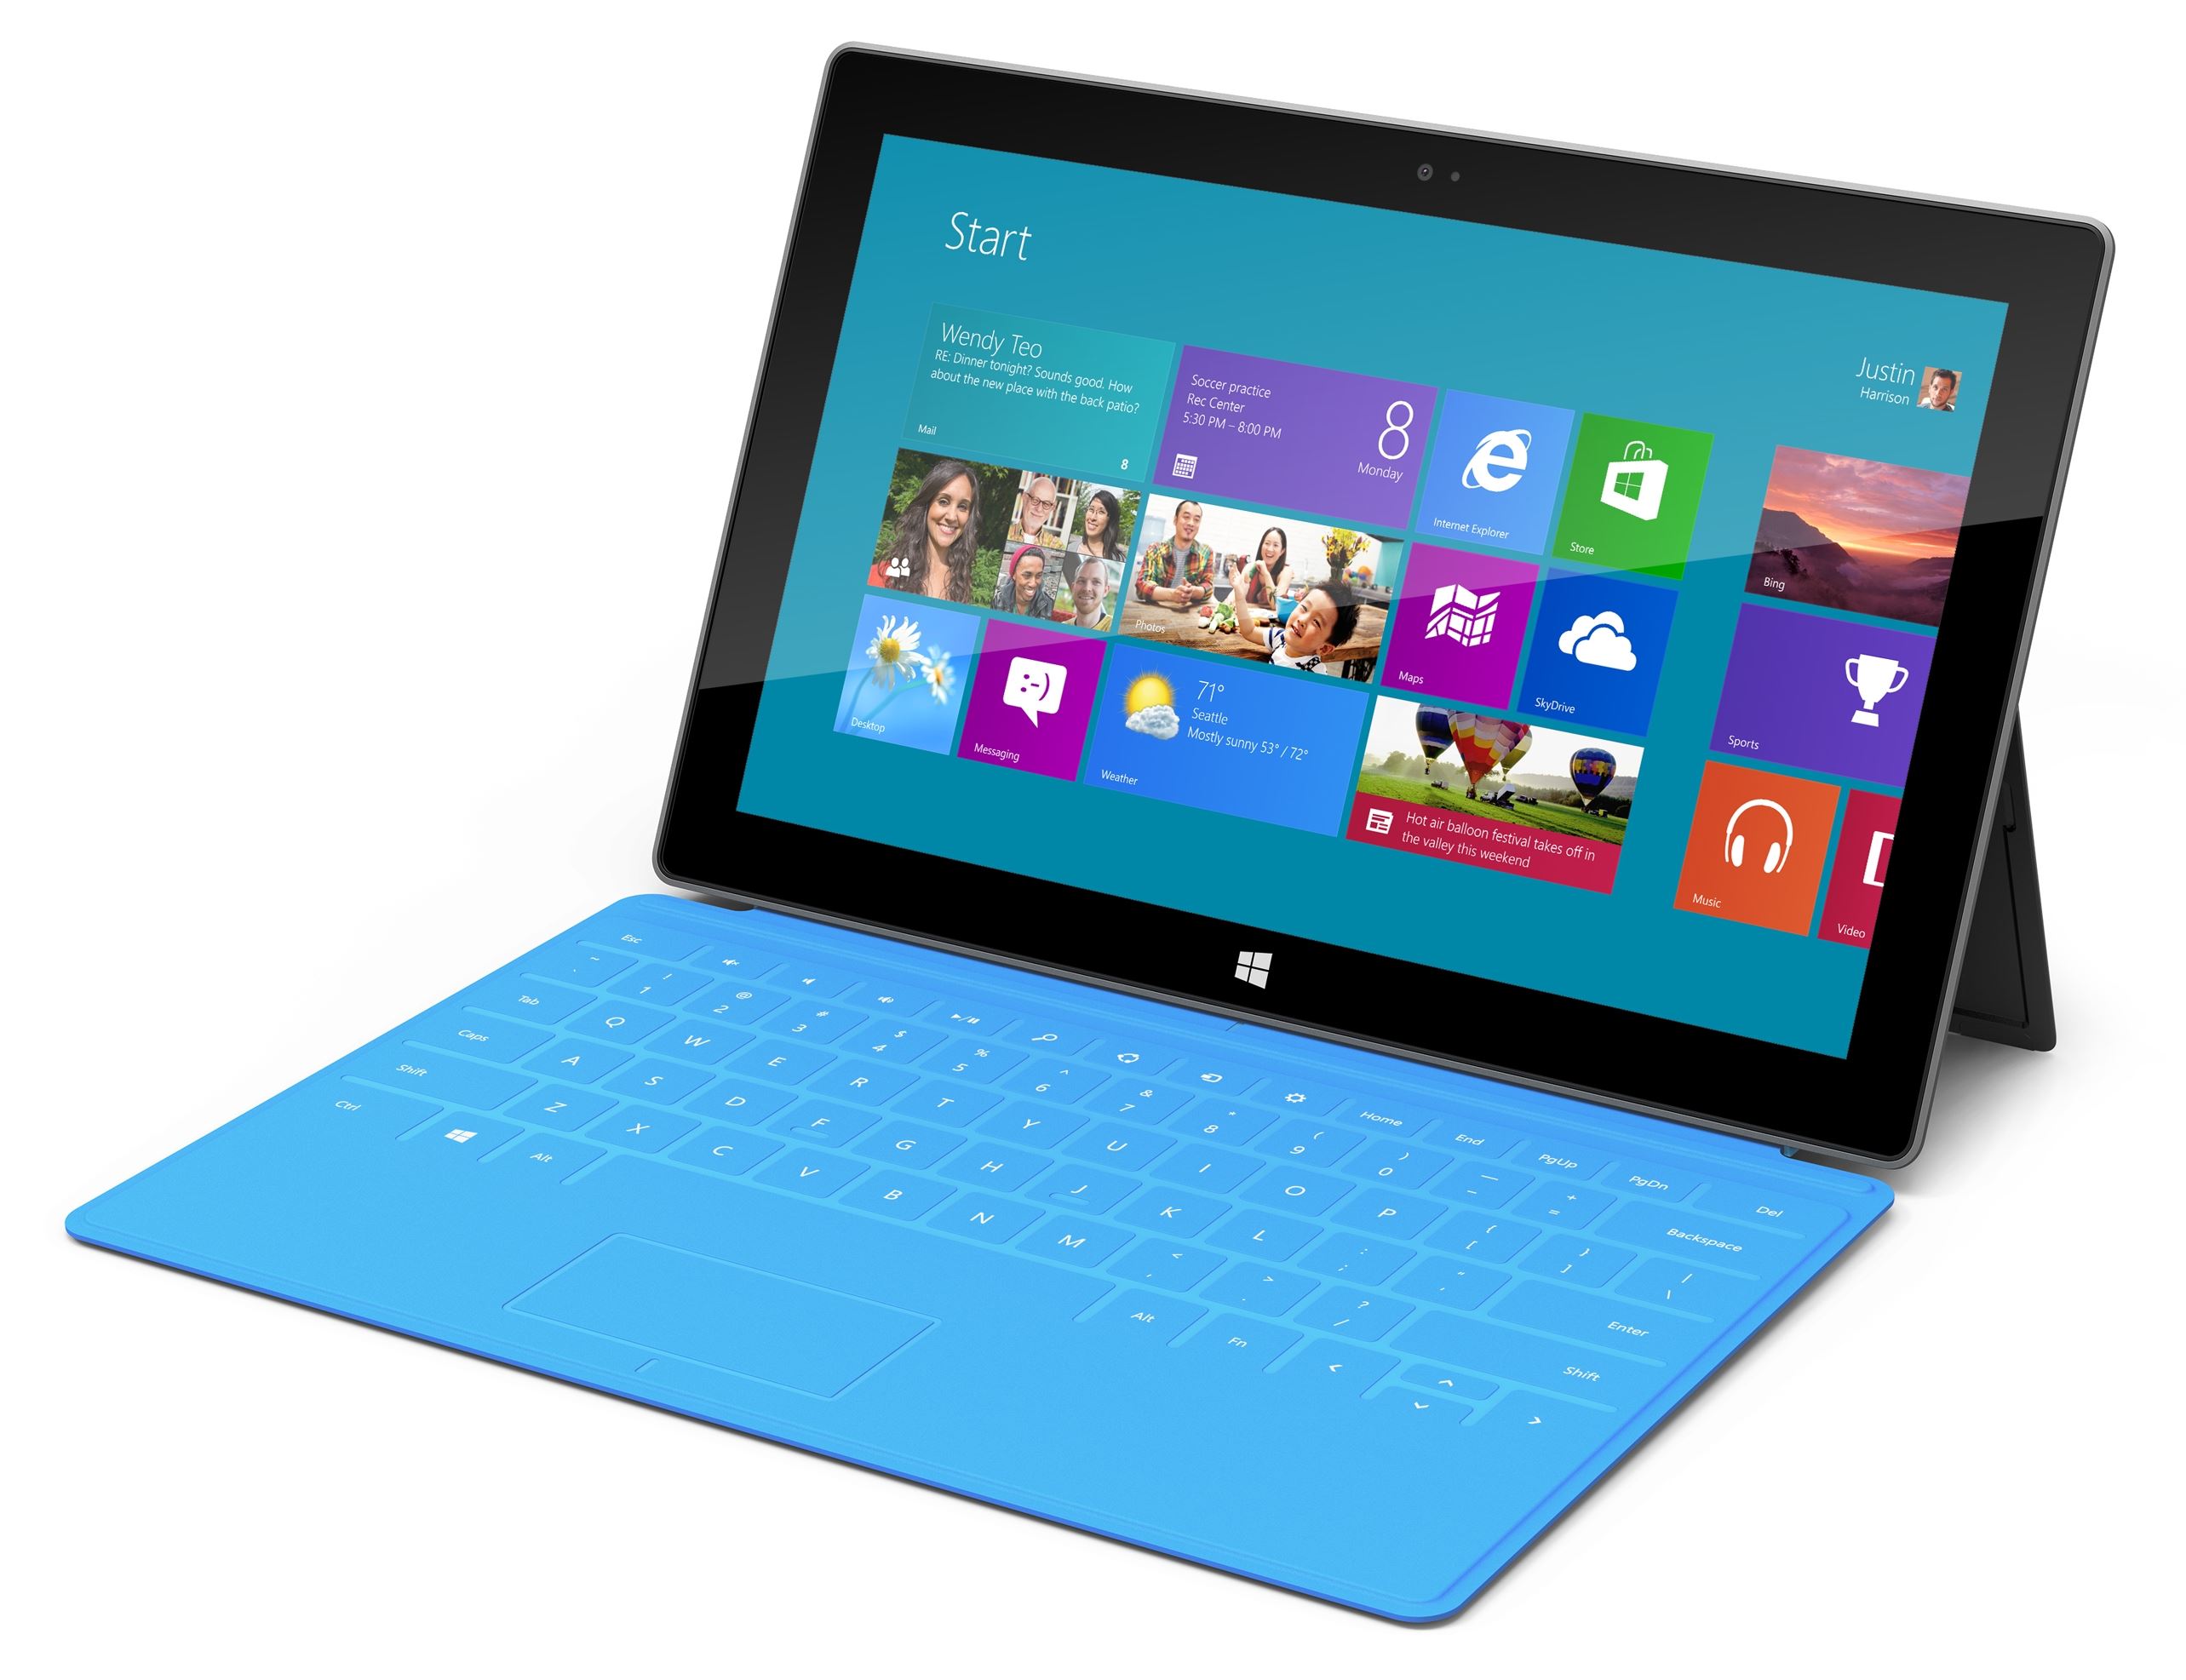 Windows 8 RT tablet